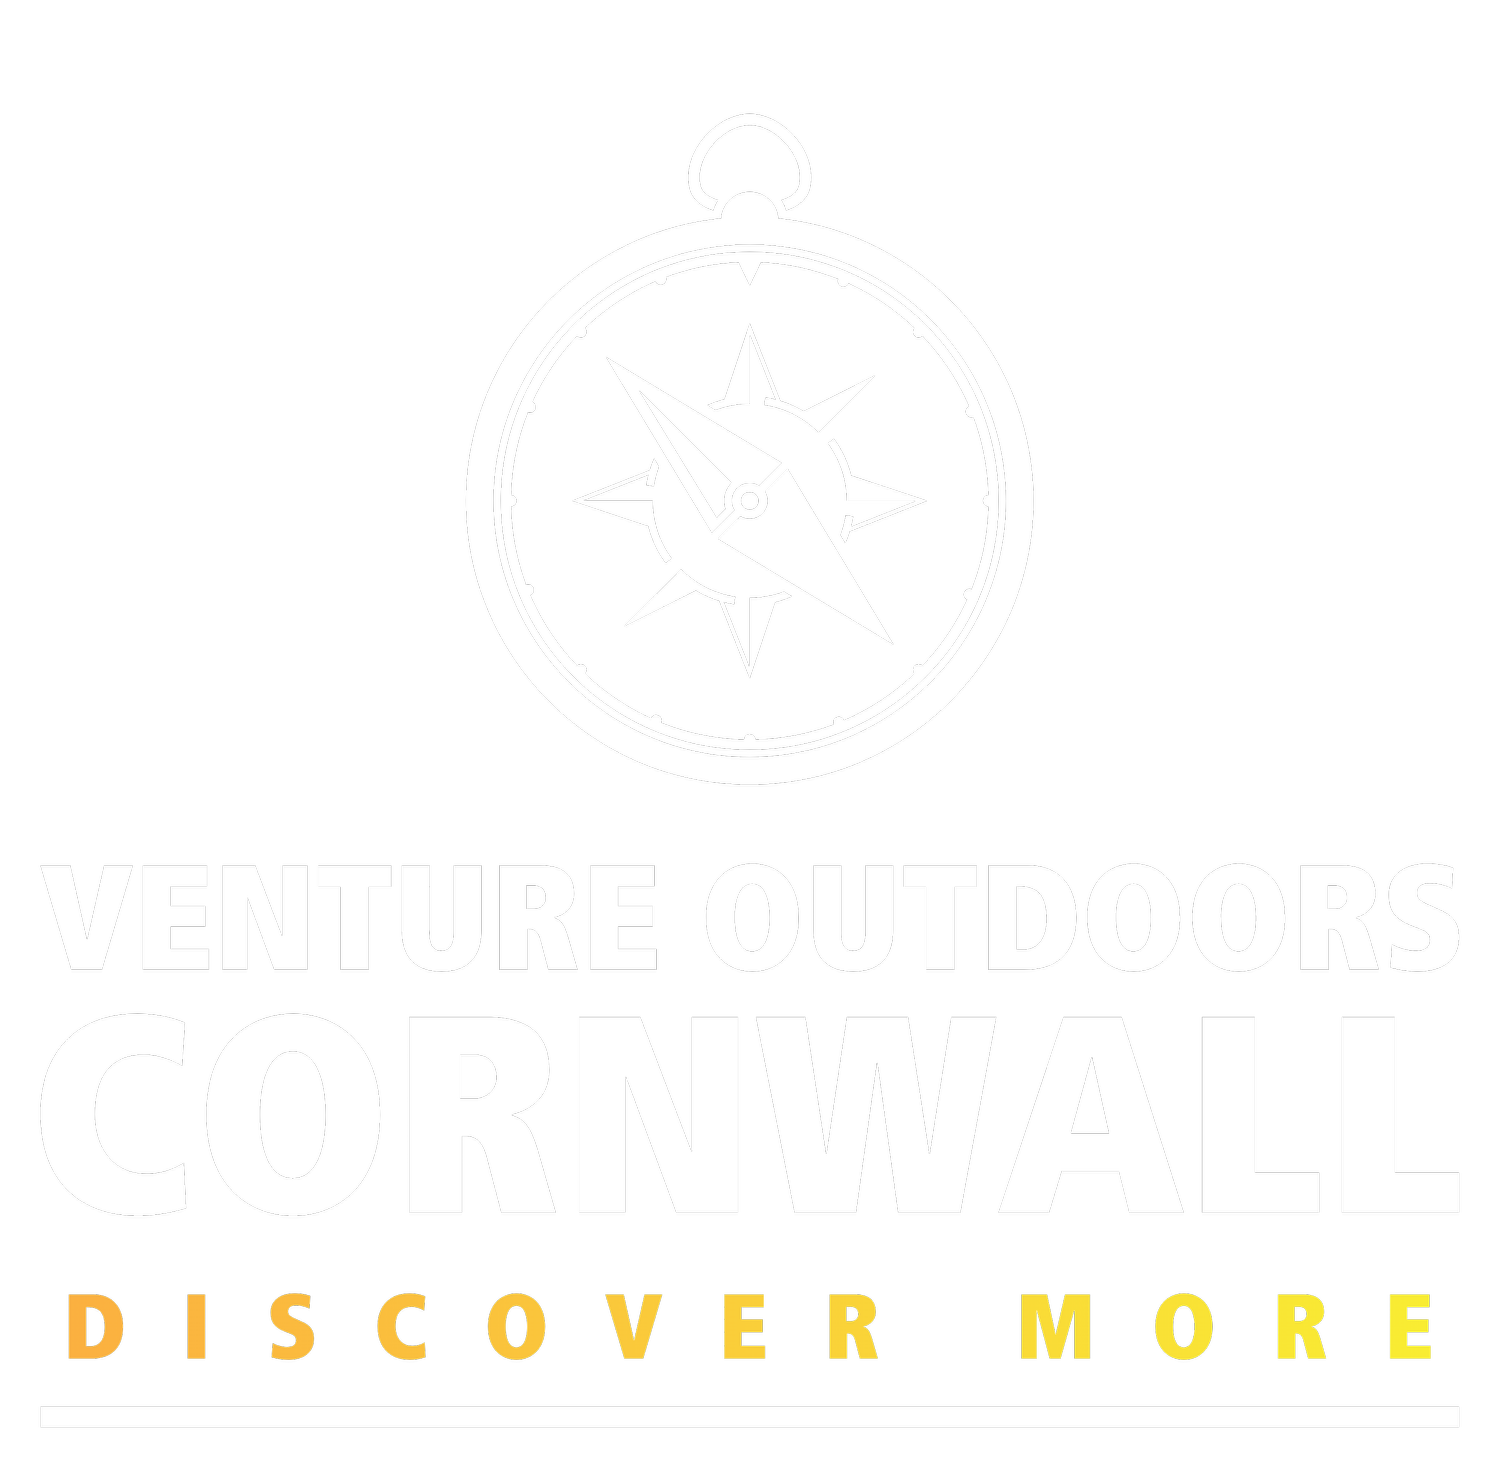 Venture Outdoors Cornwall